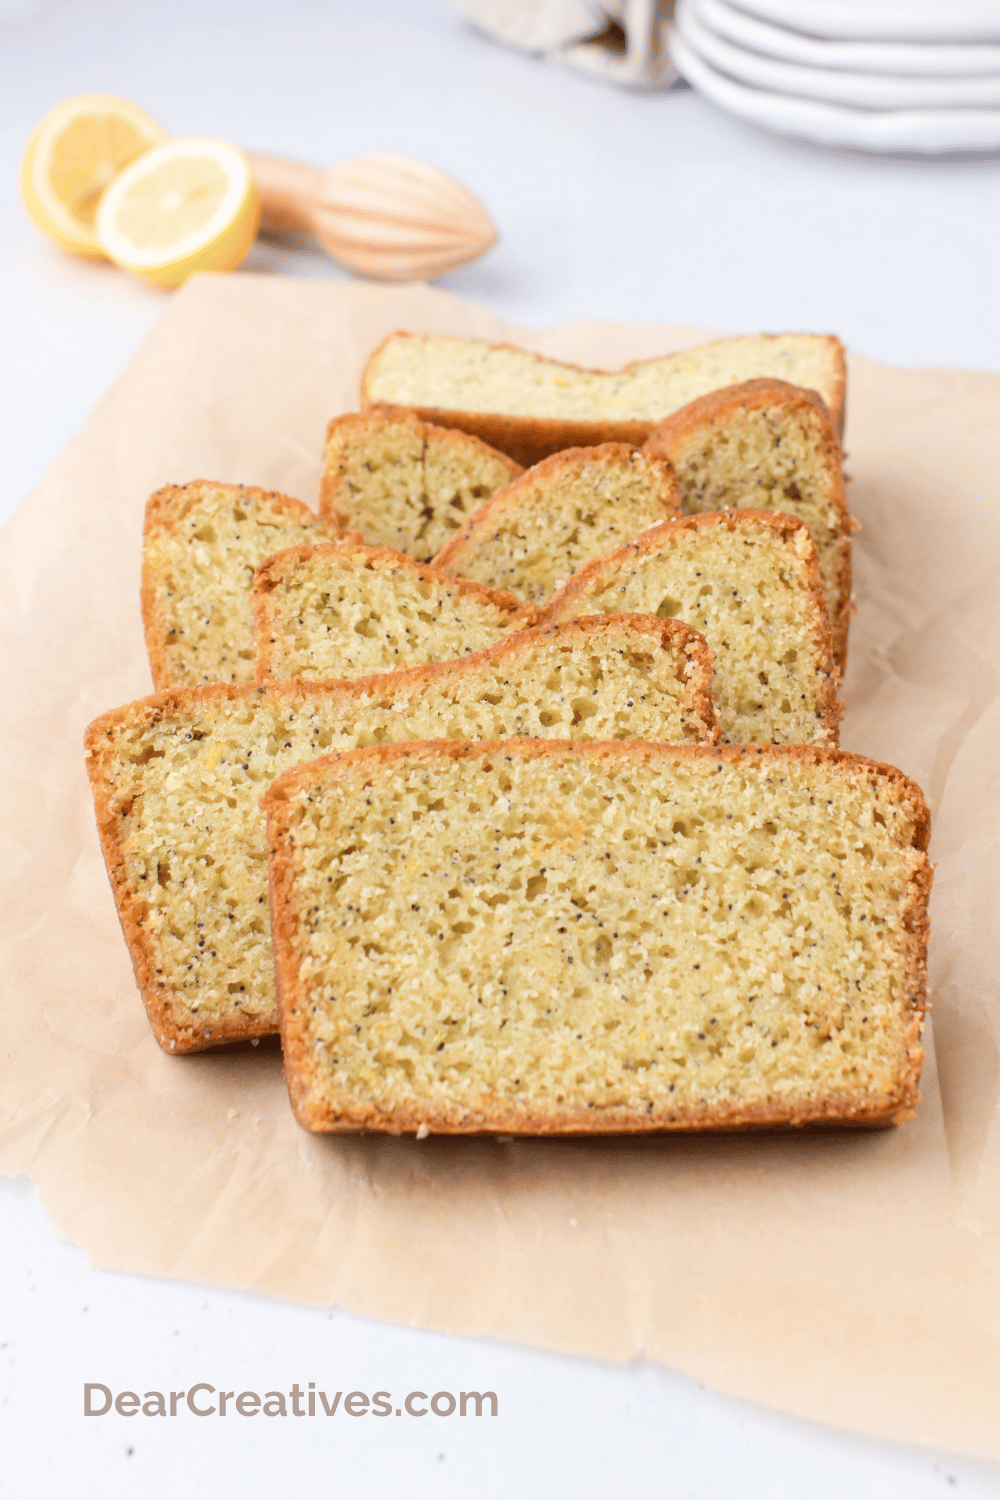 Lemon Poppy Seed Bread - Print and make this easy lemon poppy seed bread! Serve it as a snack or add lemon glaze for a dessert. Get the recipe at DearCreatives.com